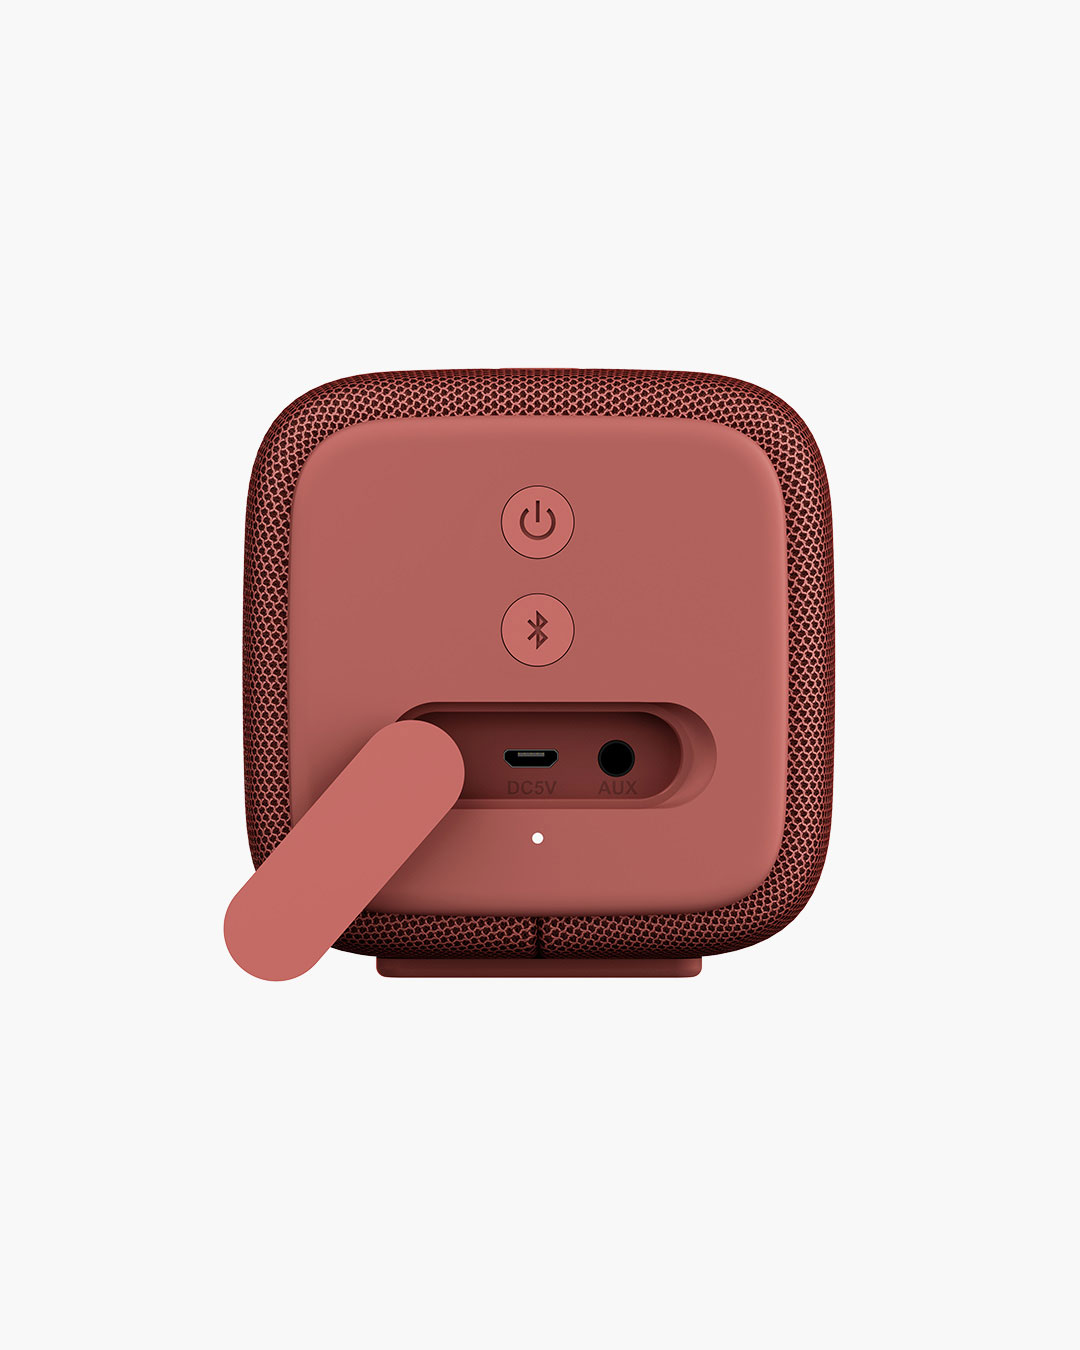 Fresh 'n Rebel - Rockbox Bold S - Wireless Bluetooth speaker - Safari Red